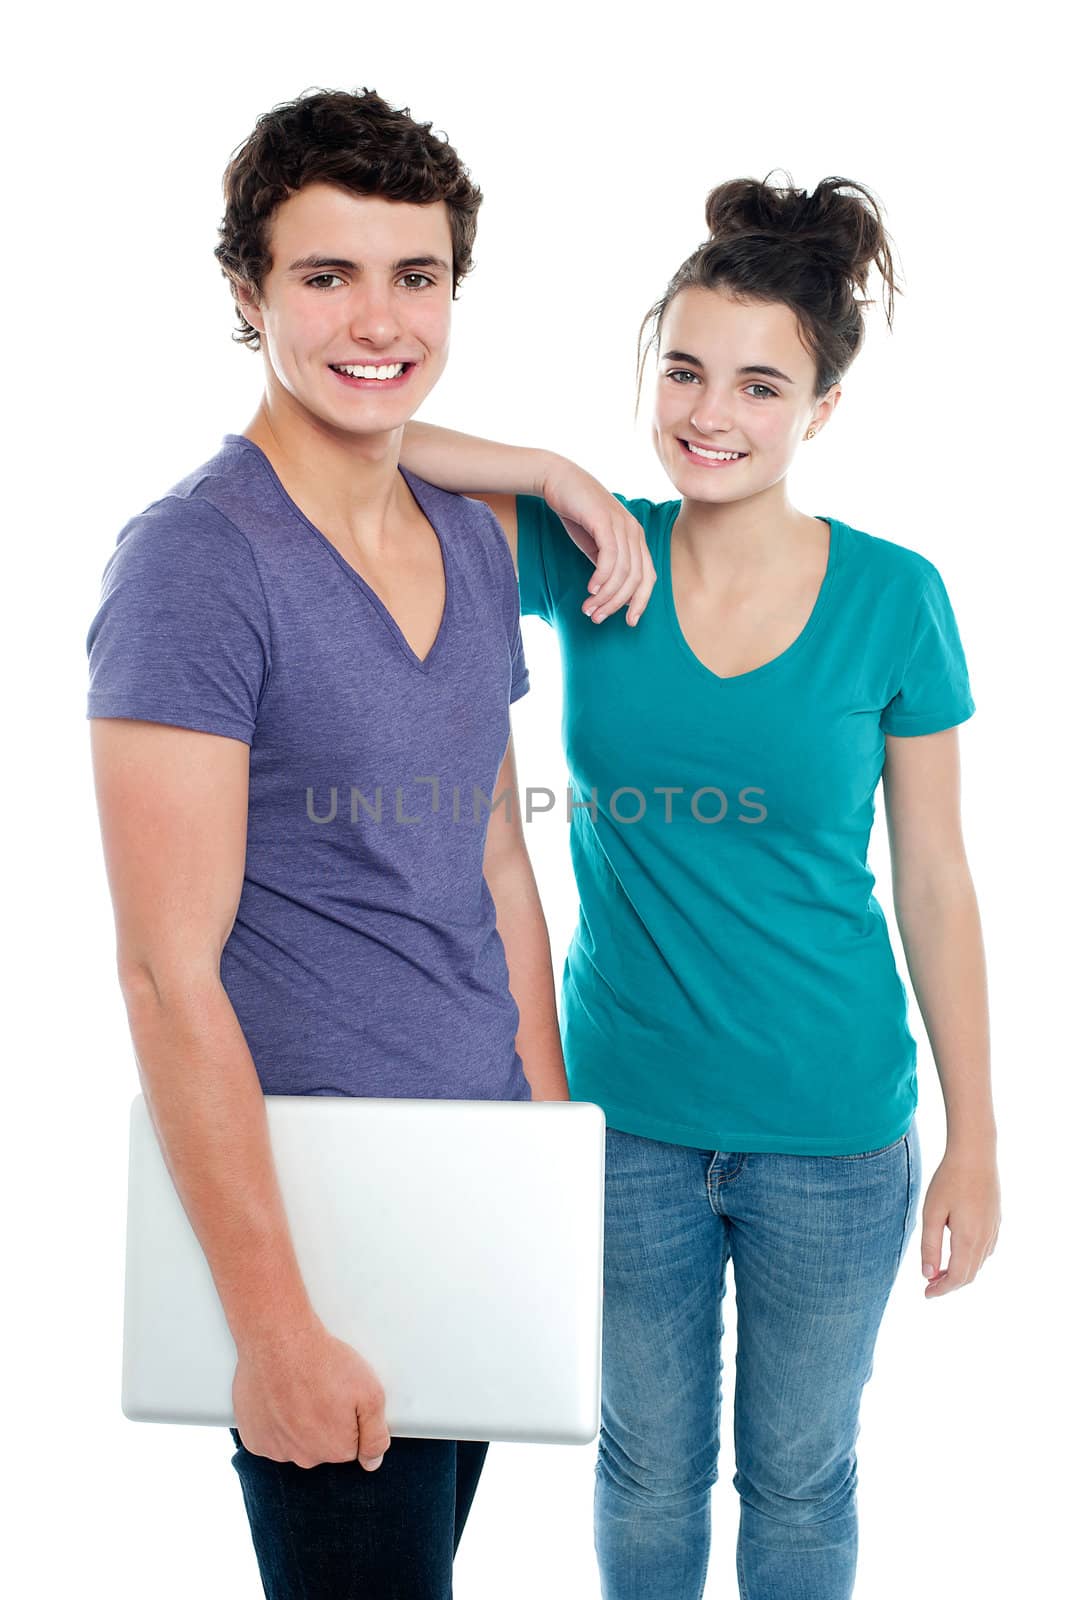 Handsome guy holding laptop posing with his girlfriend. Indoor shot